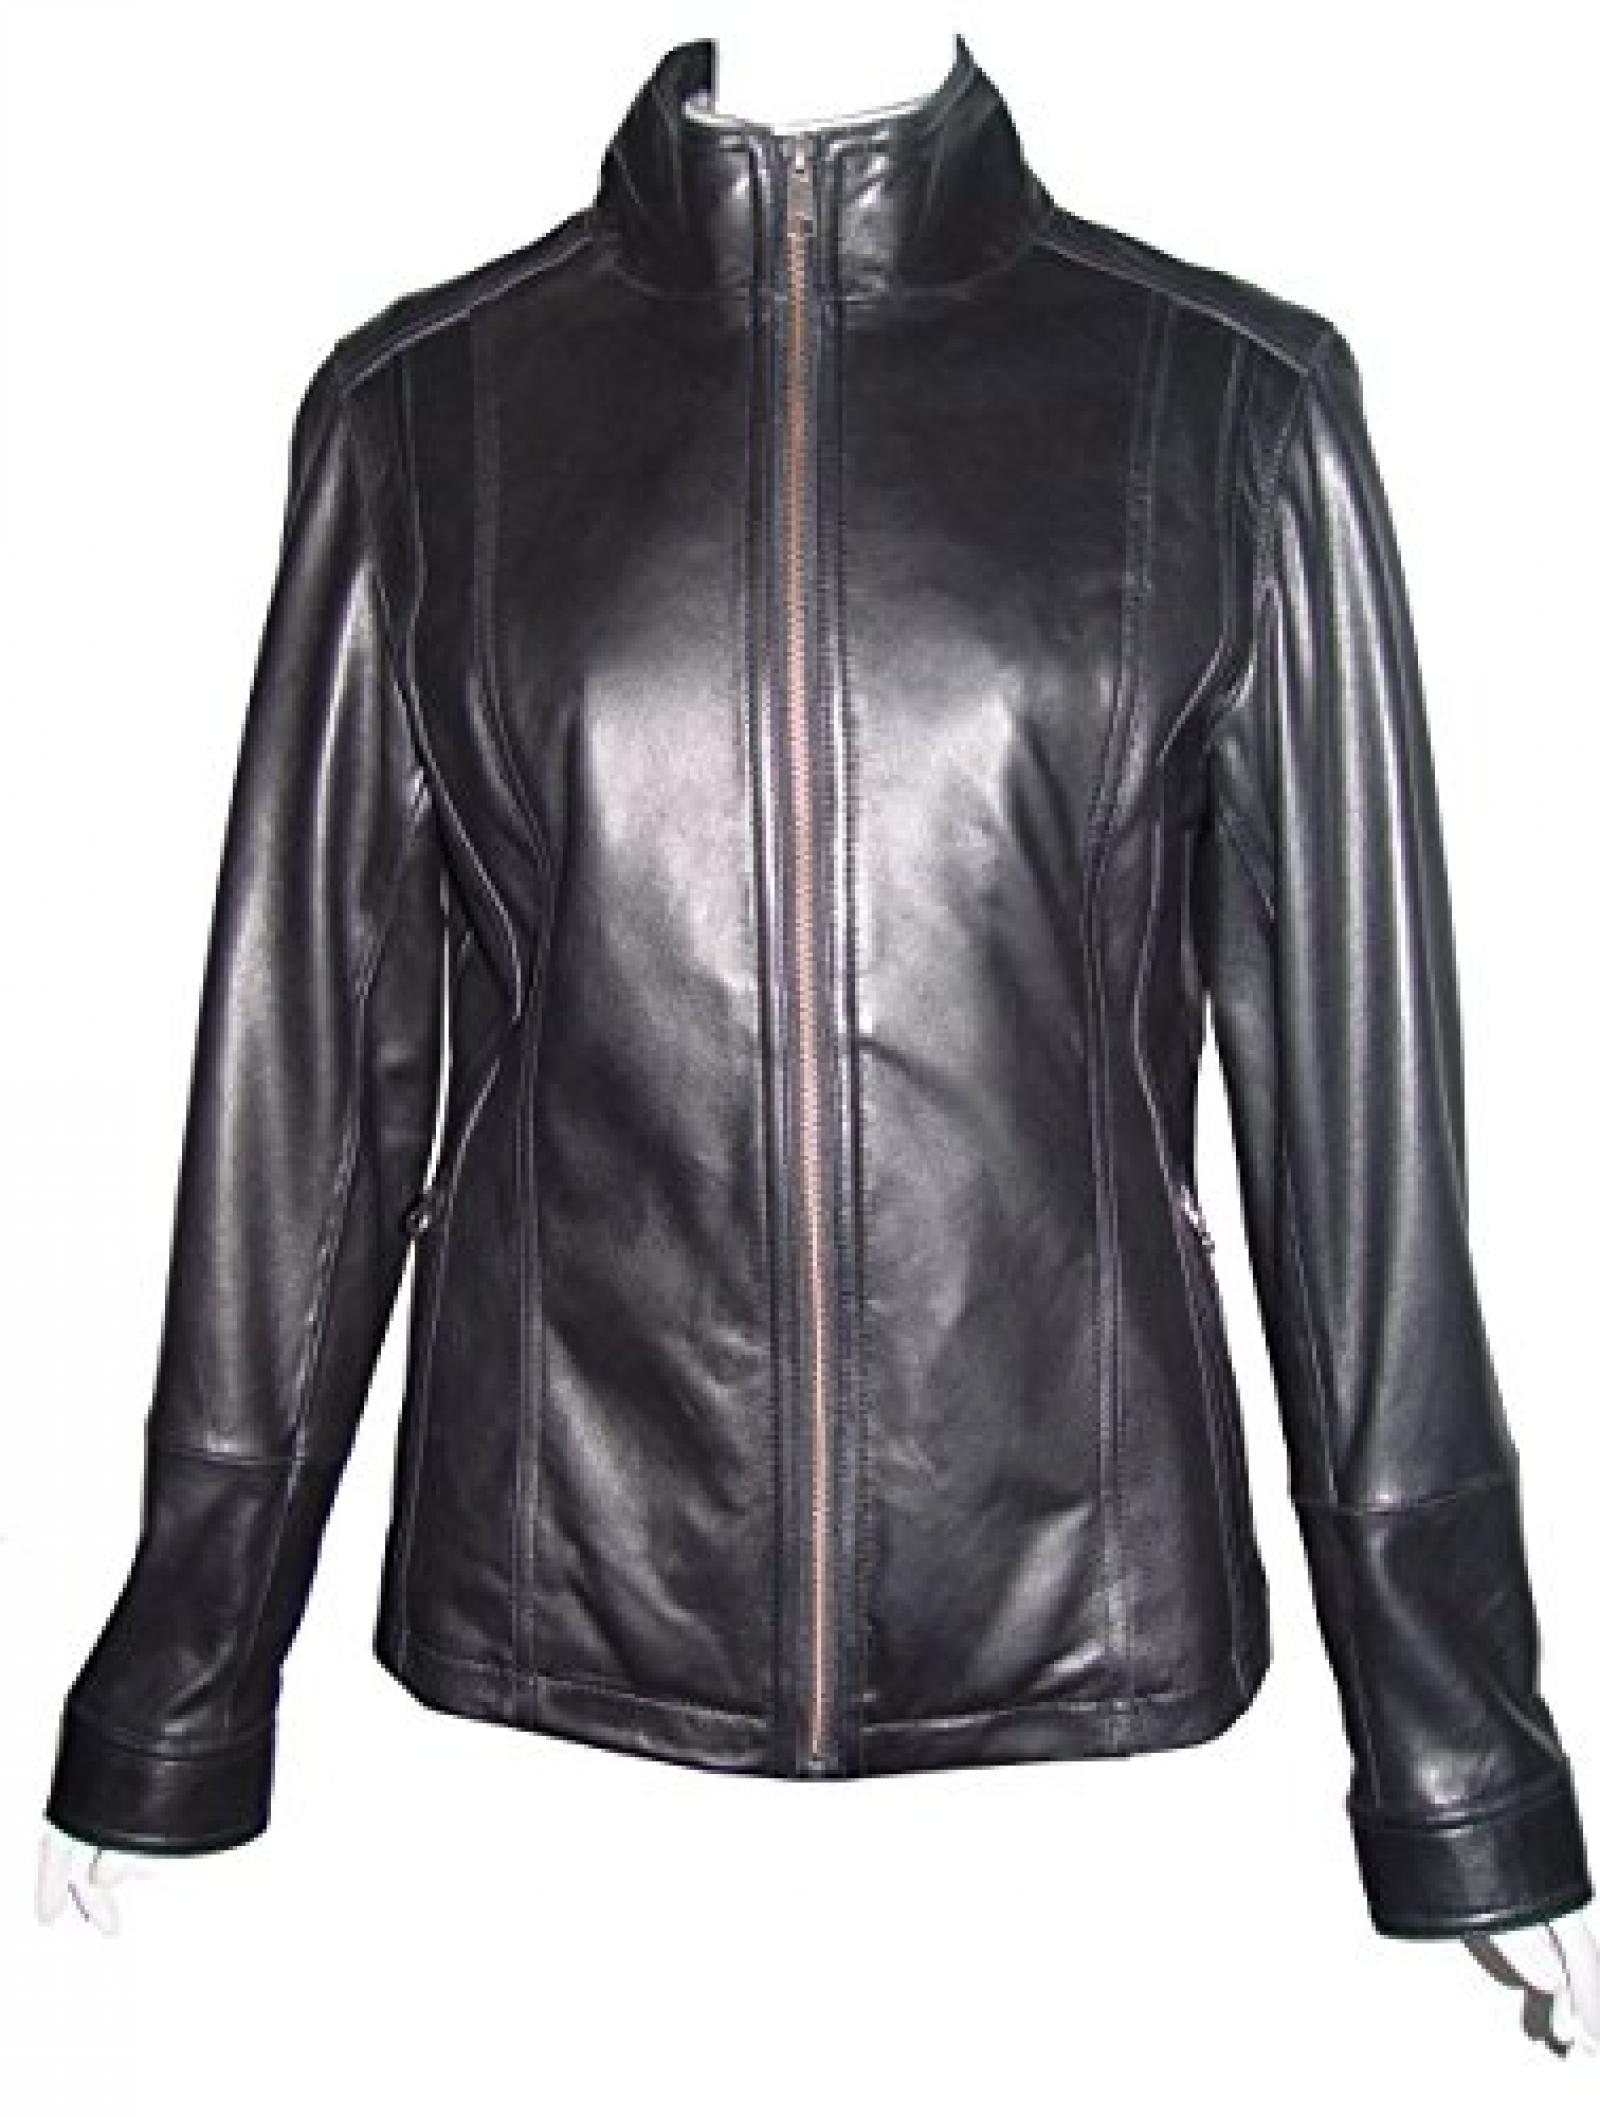 Nettailor Women 4202 Soft Leather New Casual Jacket Zip Front Closure Zip Pocket 